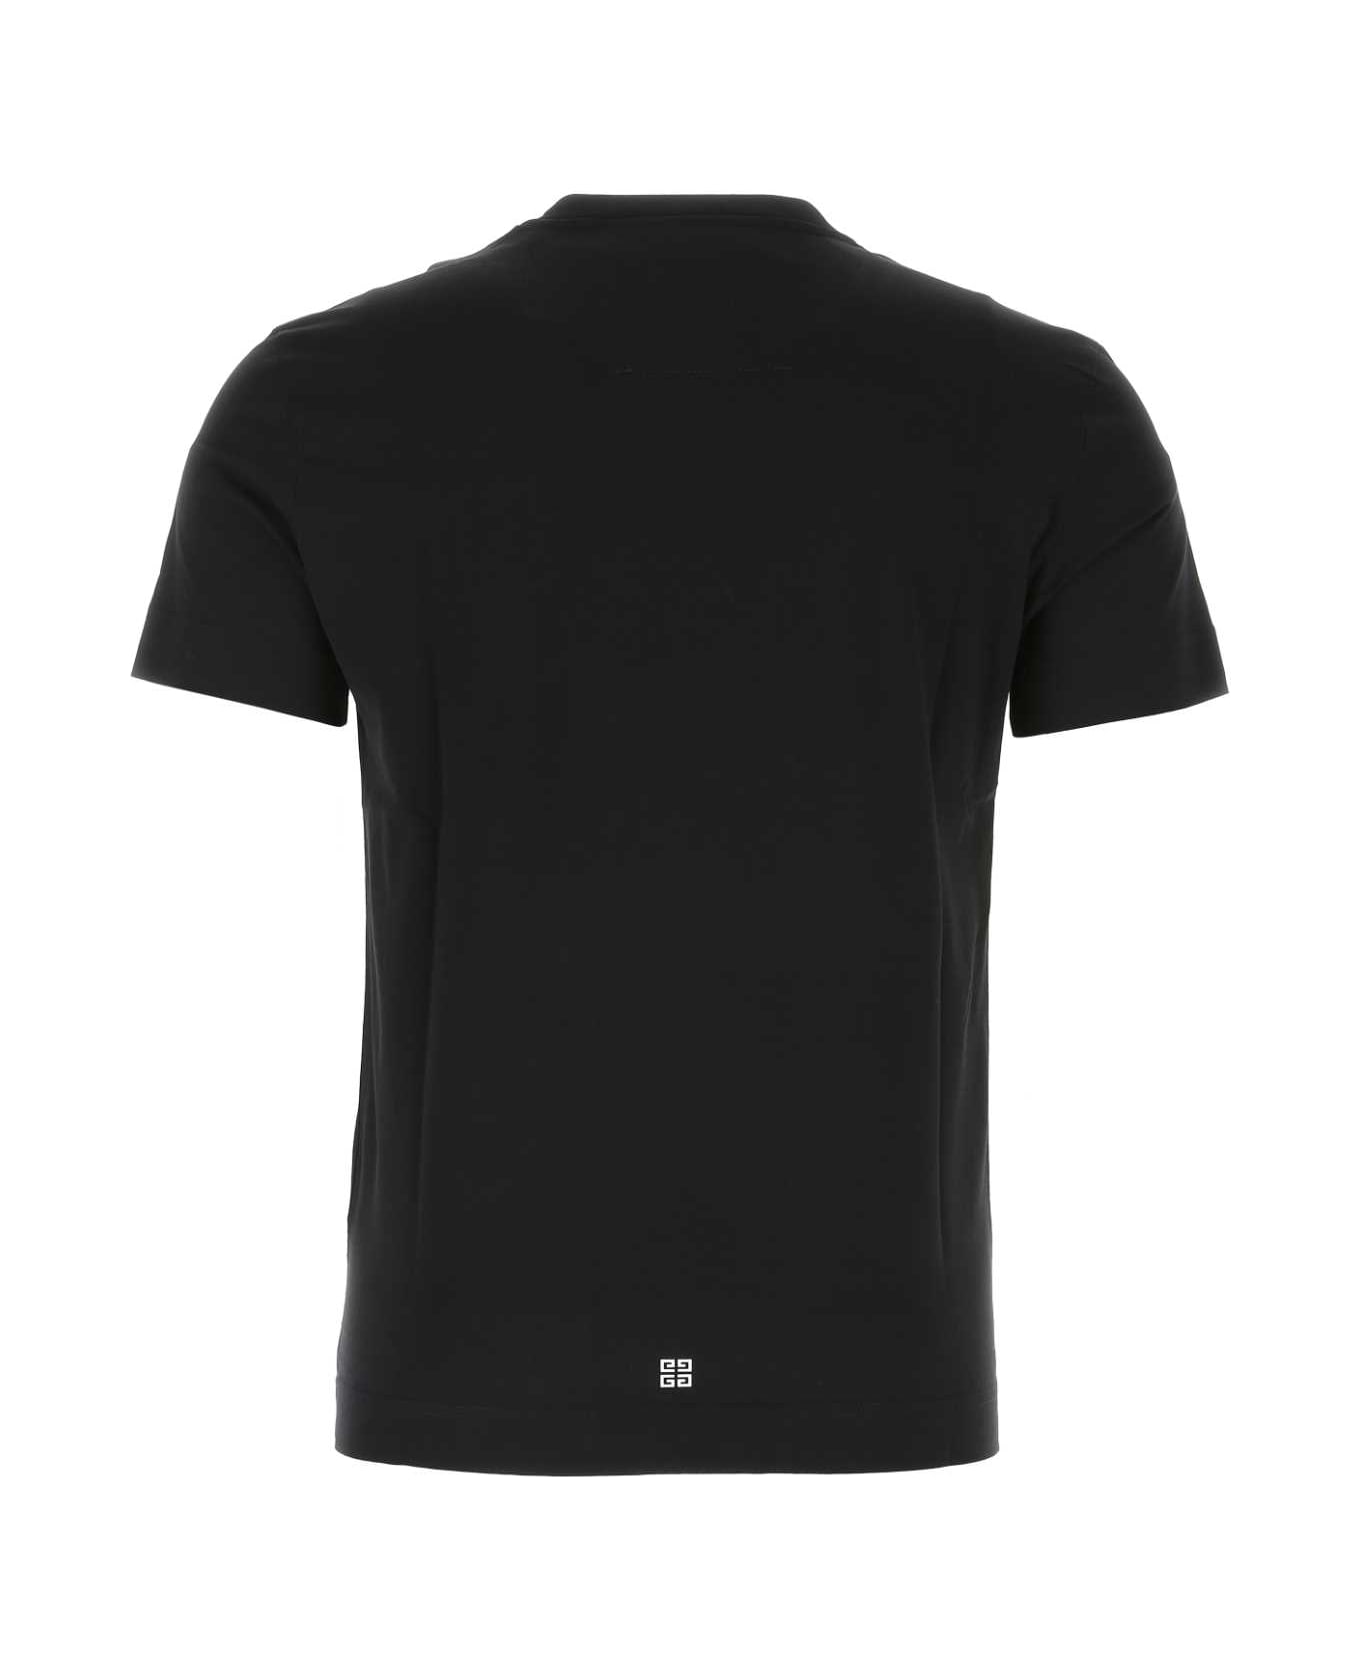 Givenchy Black Cotton T-shirt - 001 シャツ